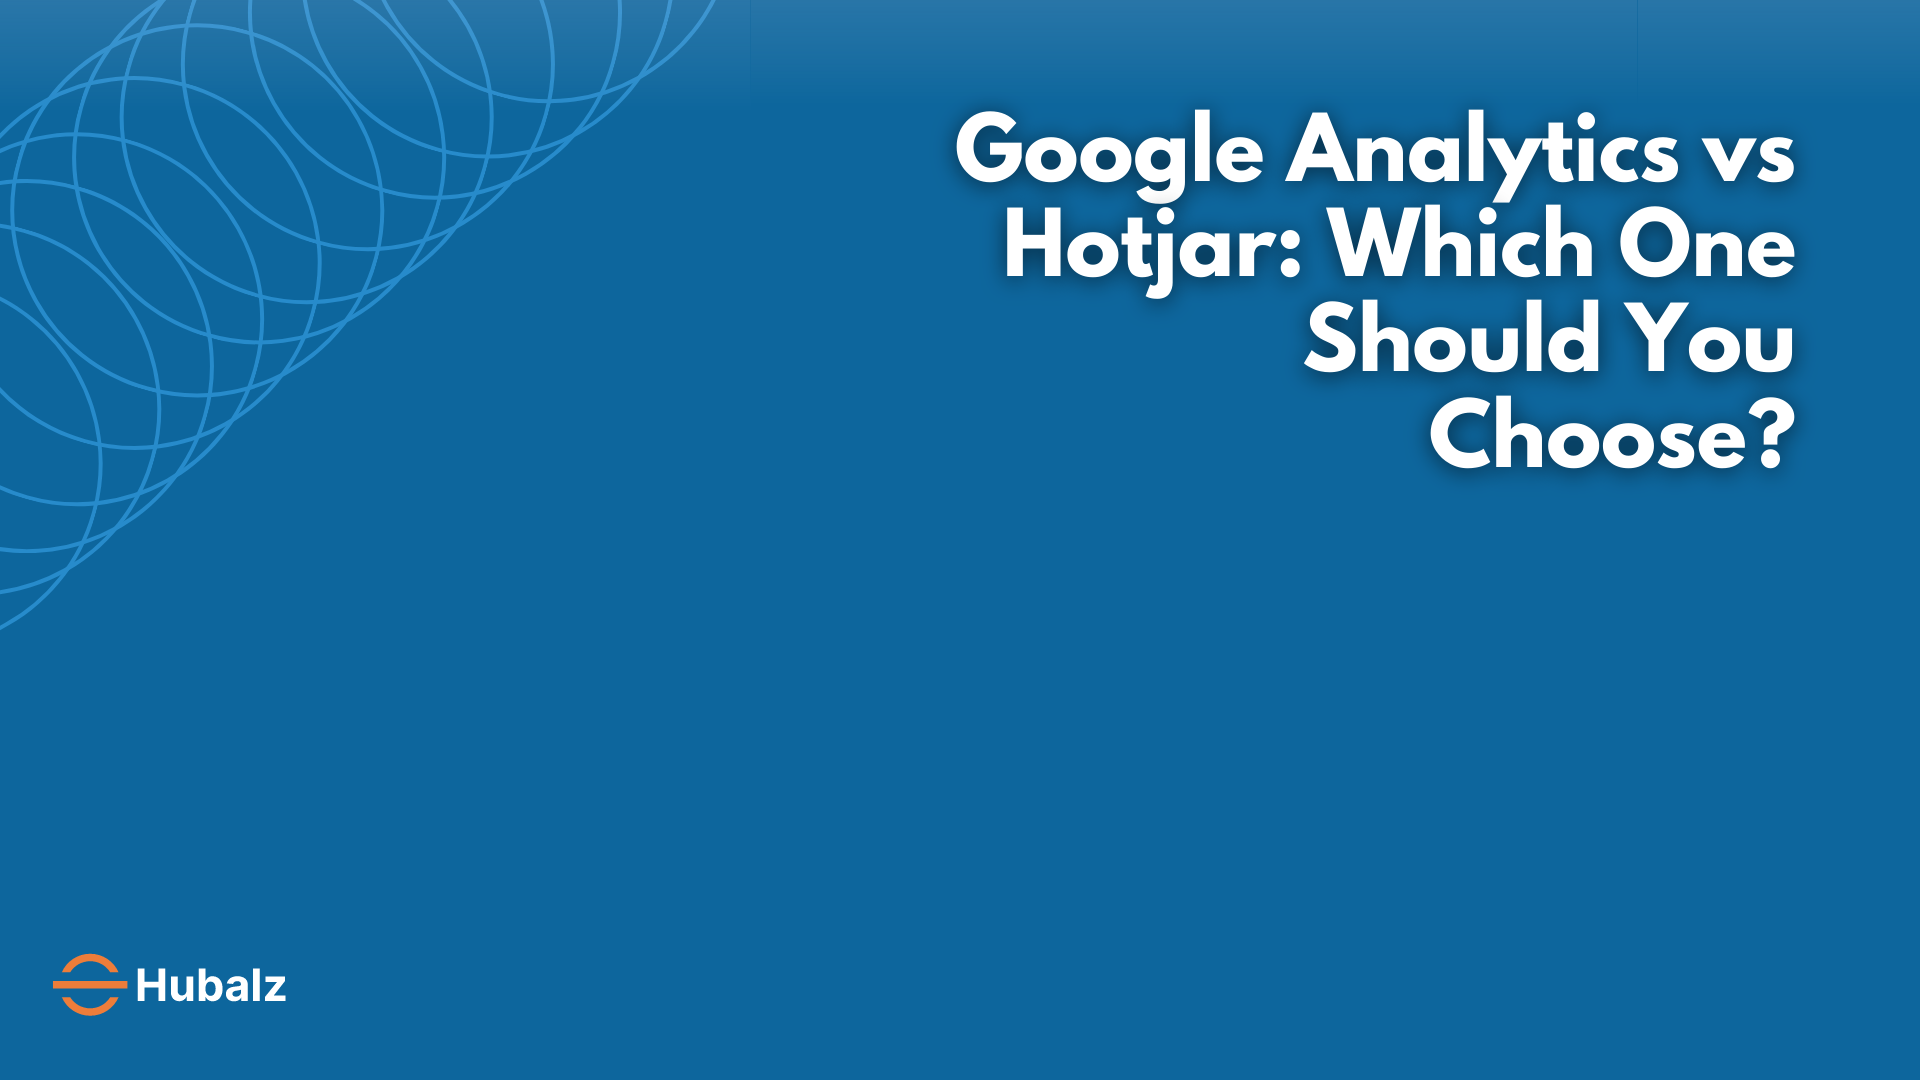 Google Analytics vs Hotjar: Which One Should You Choose?